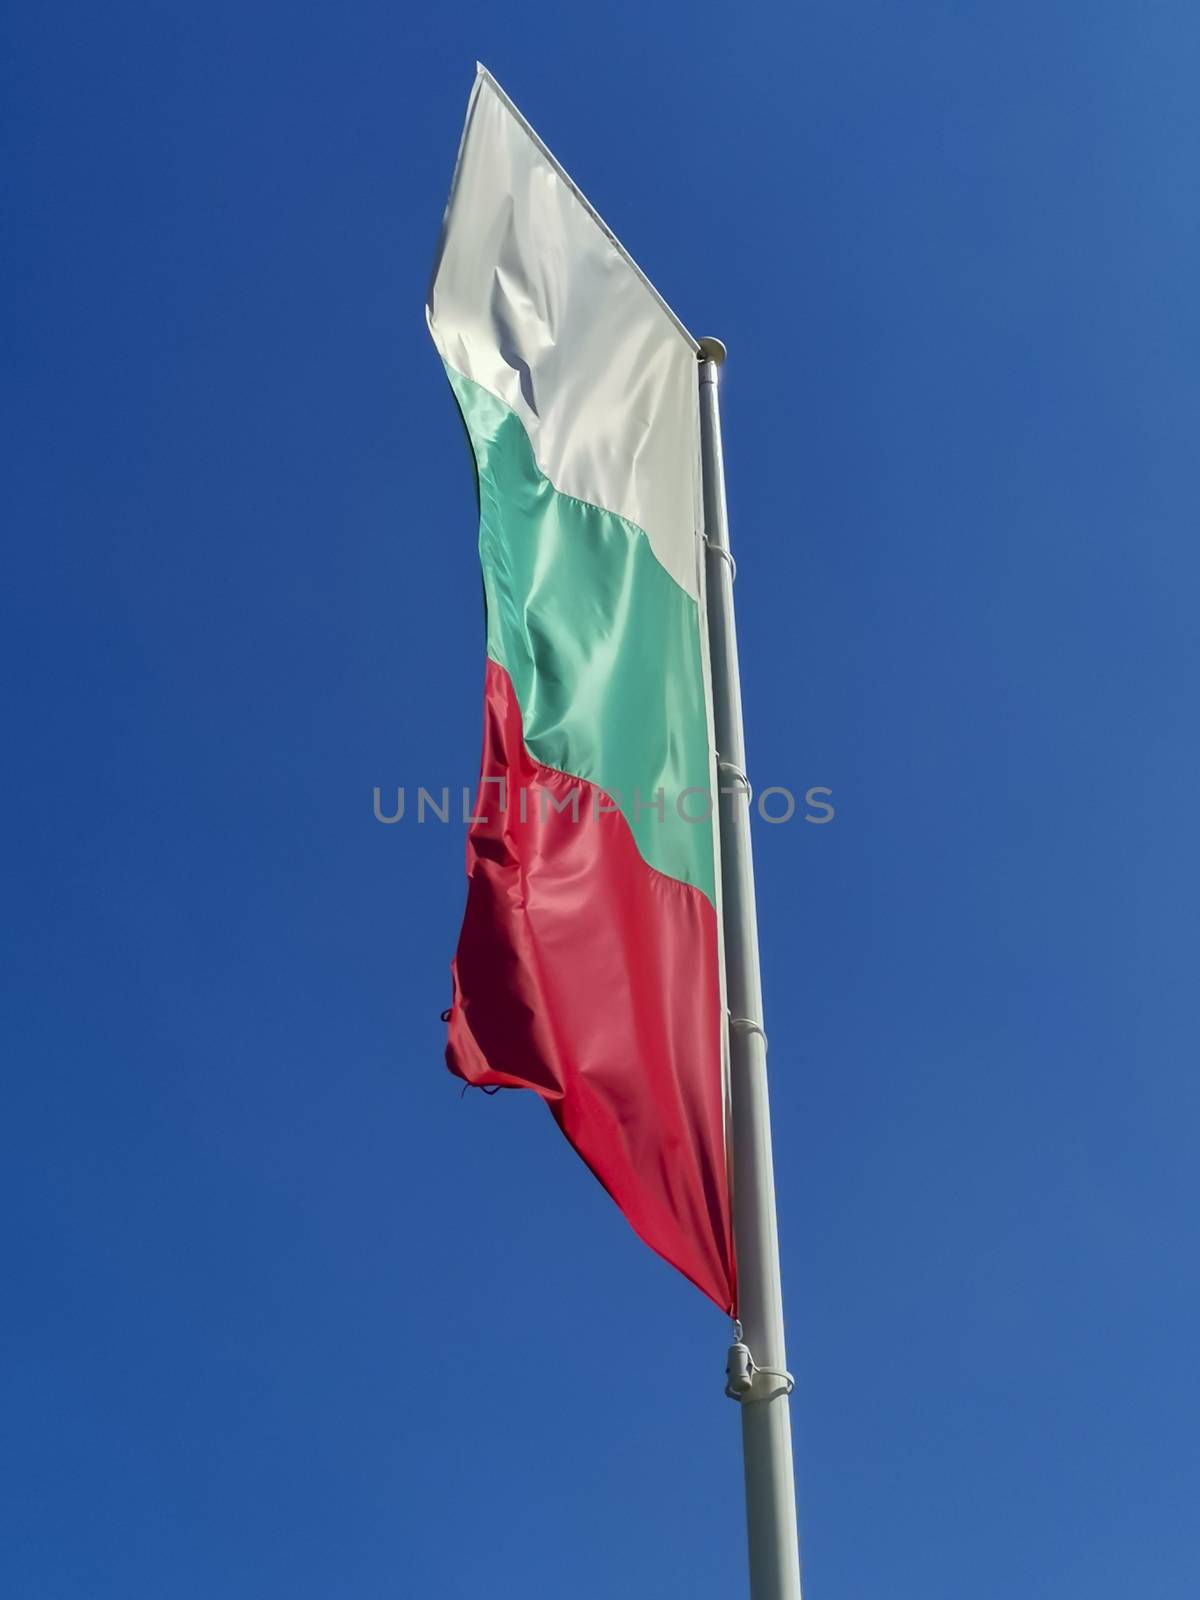 Bulgarian flag waving on blue sky background. The location is Obzor, Bulgaria. Flag of Bulgaria against the clear sky.